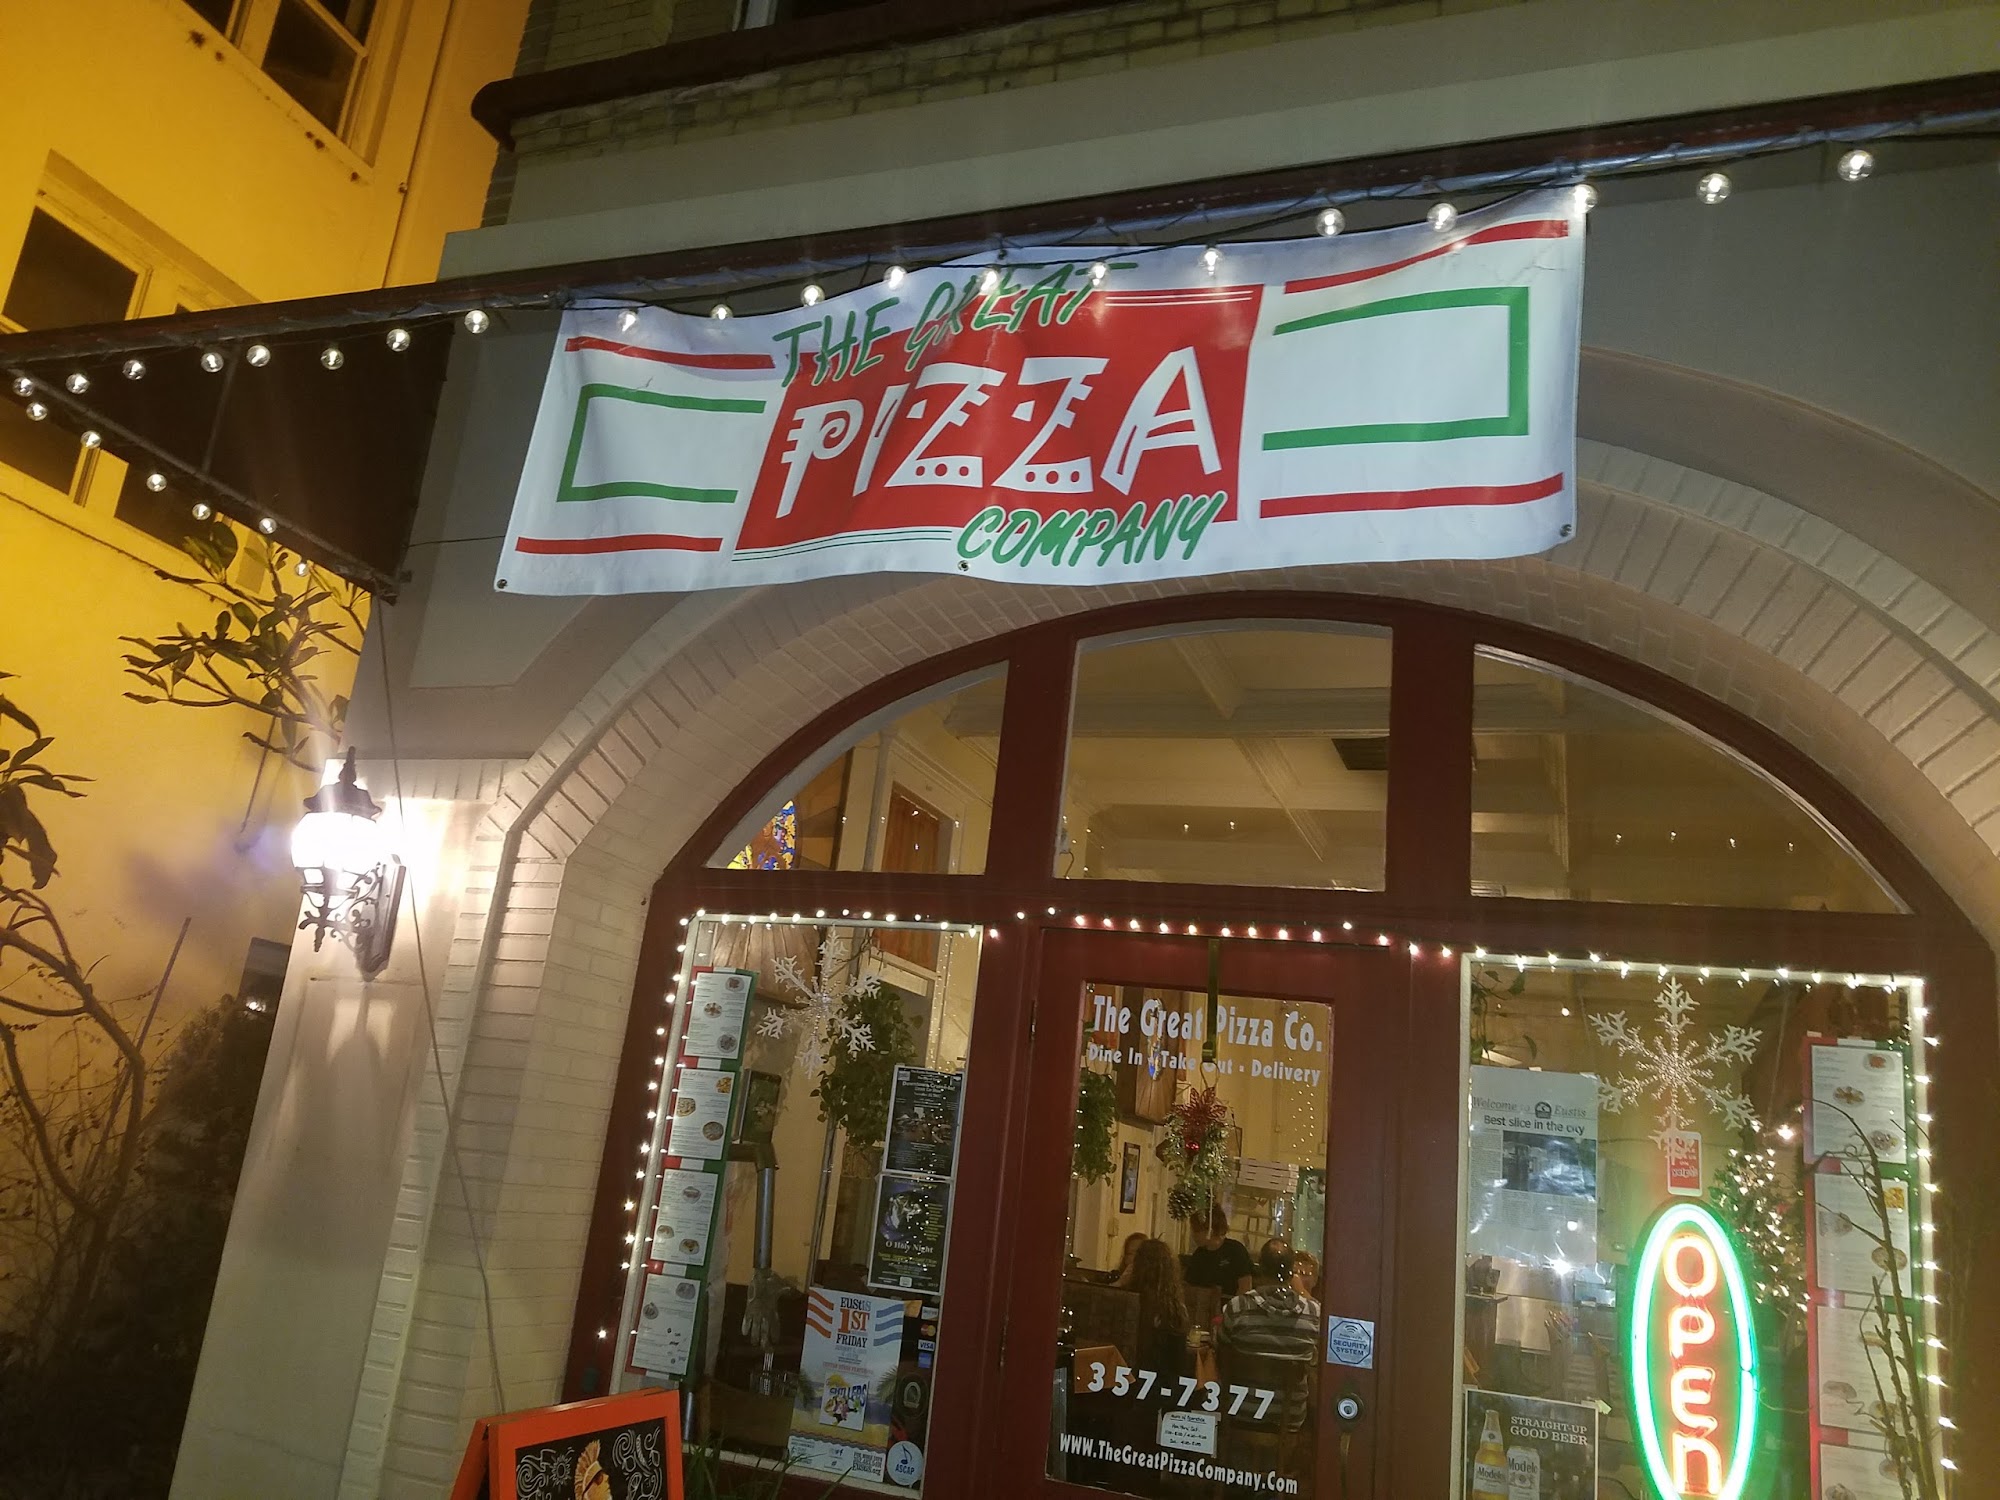 The Great Pizza Company